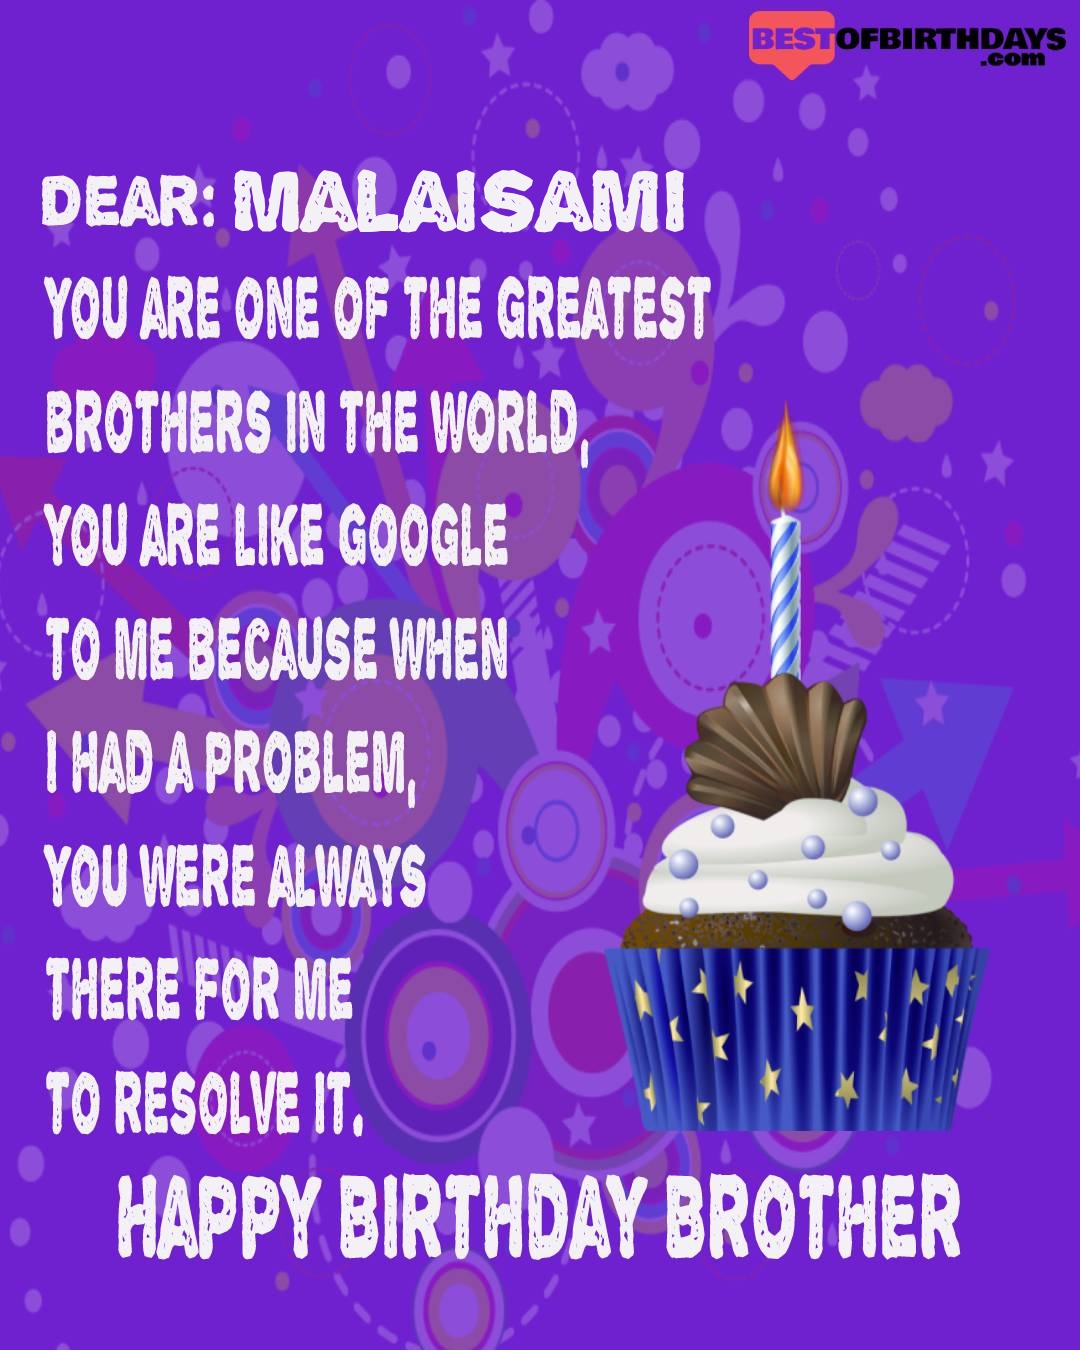 Happy birthday malaisami bhai brother bro